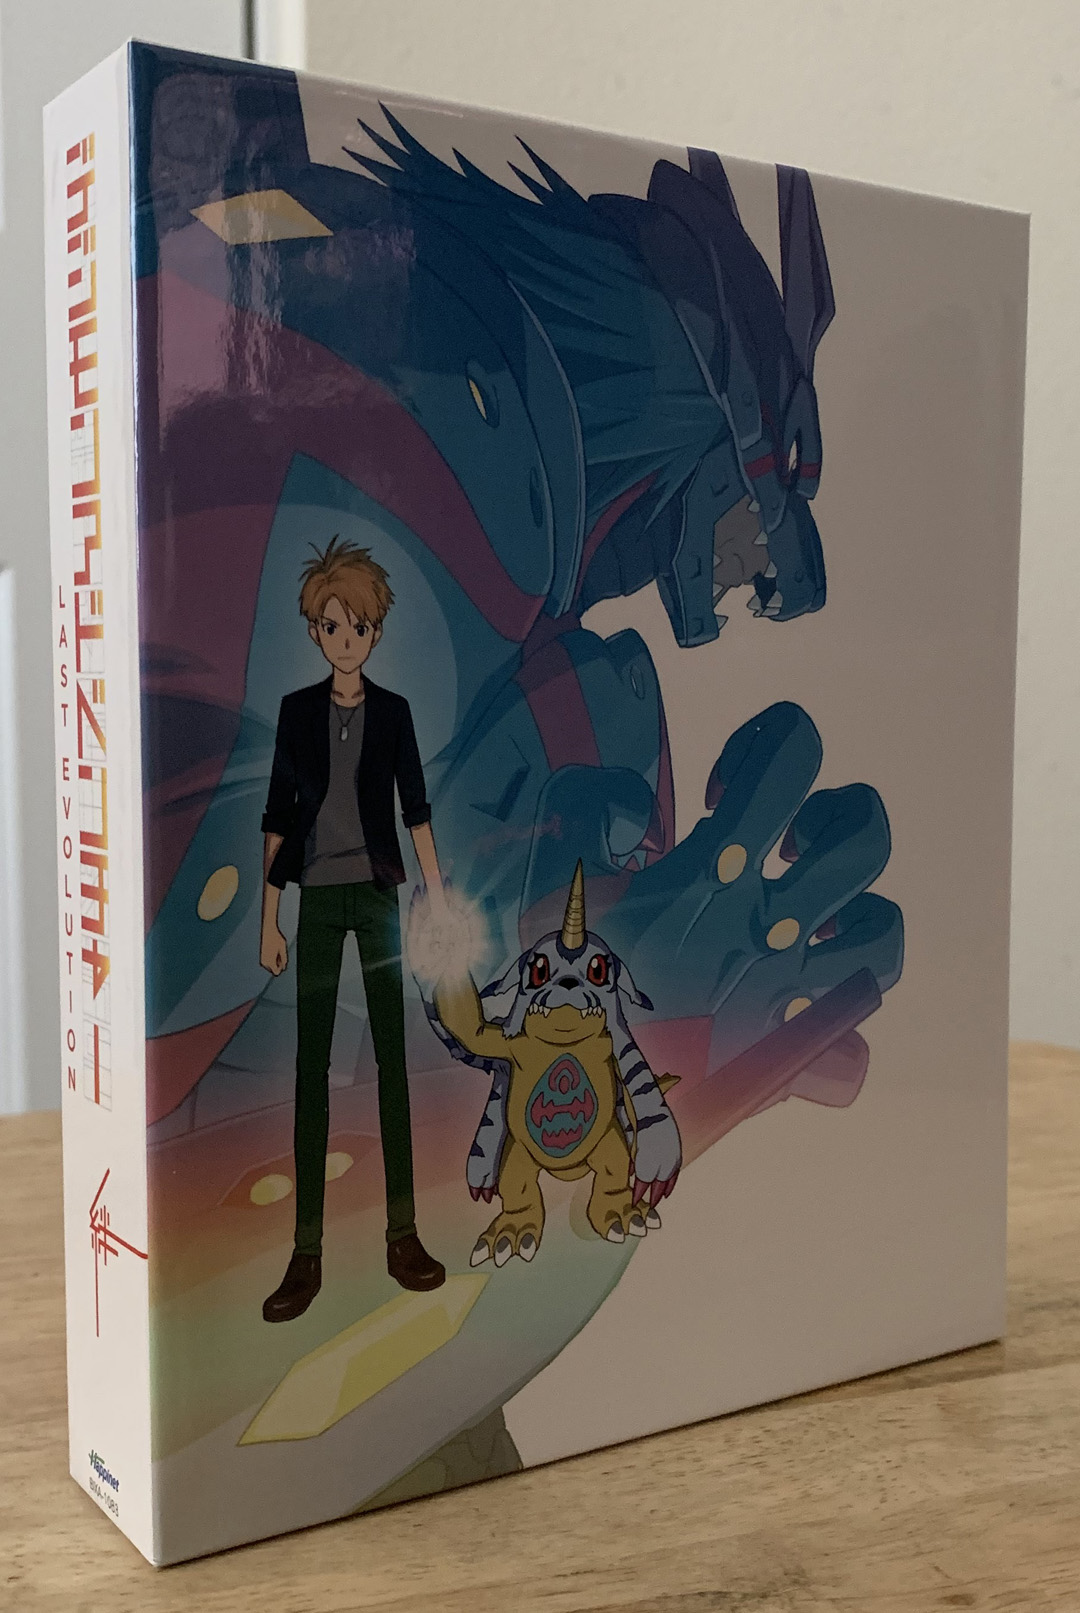 Digimon Adventure: Last Evolution Kizuna Blu-ray + DVD & Slipcover New Free  Ship